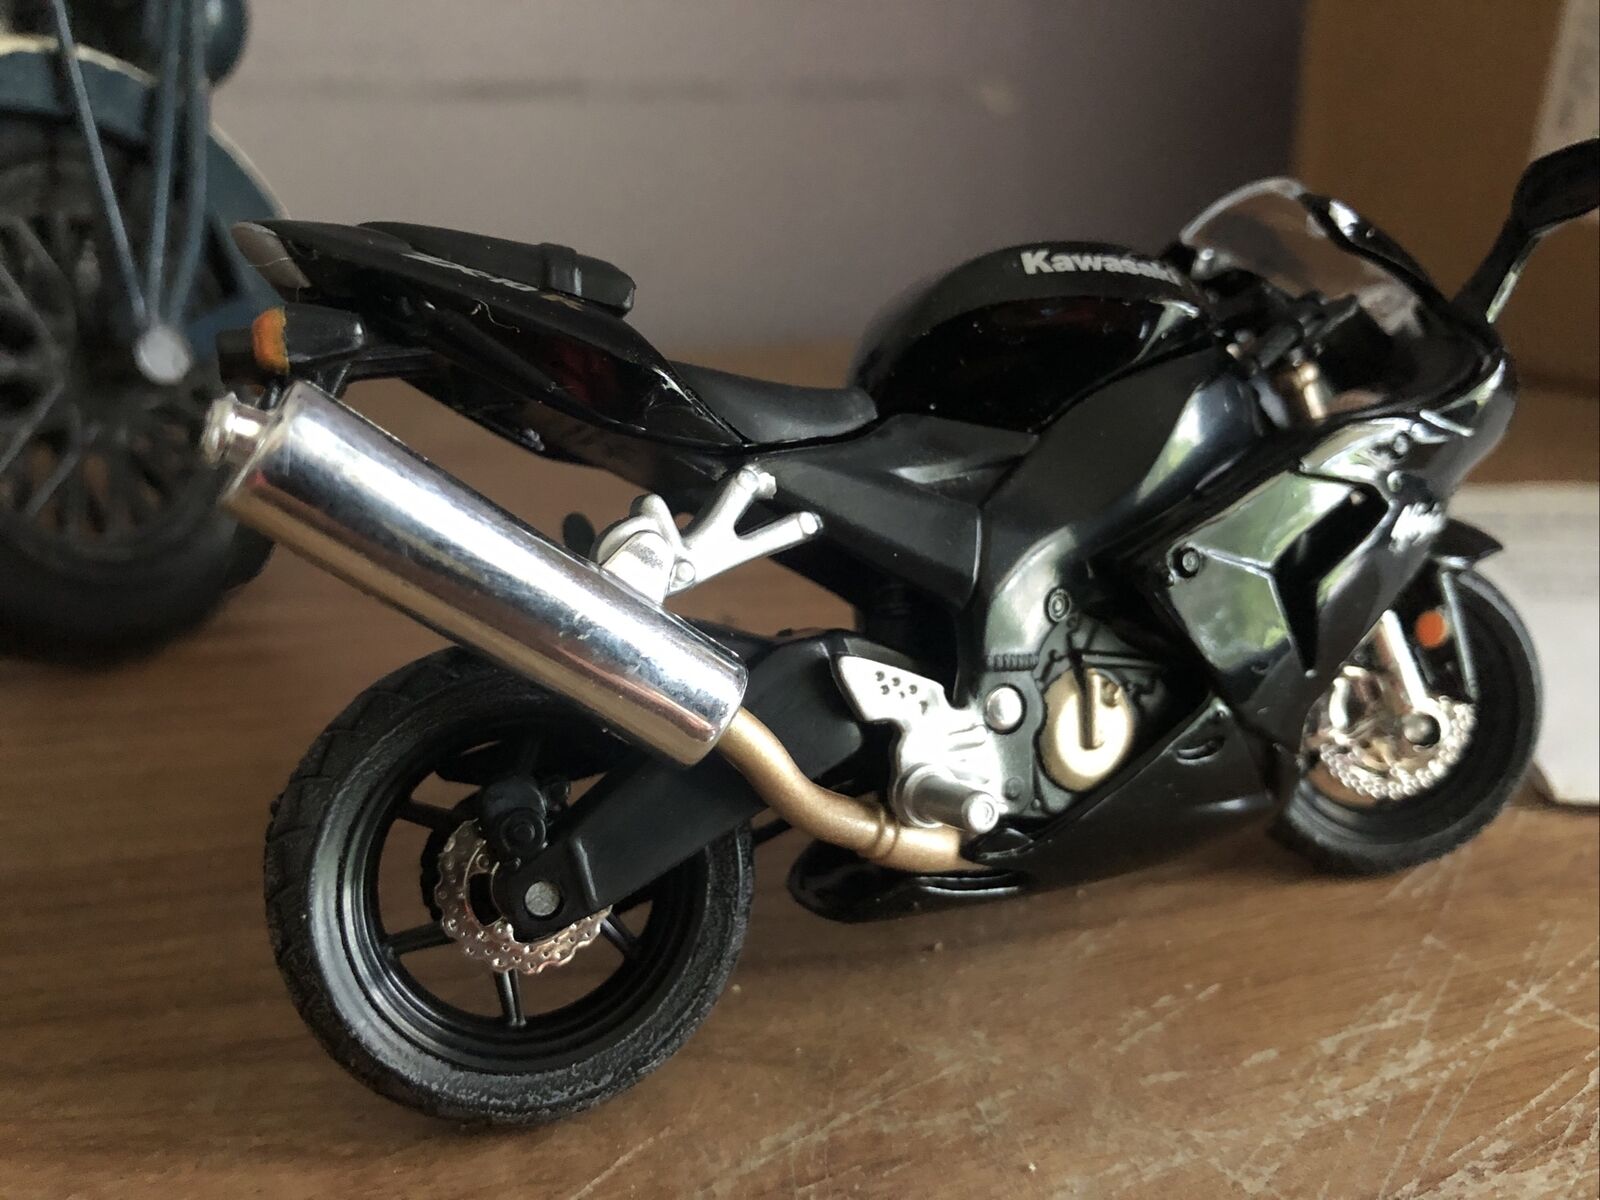 MAISTO 1:18 KAWASAKI Ninja ZX-10R MOTORCYCLE Bike Model collection Toy Gift